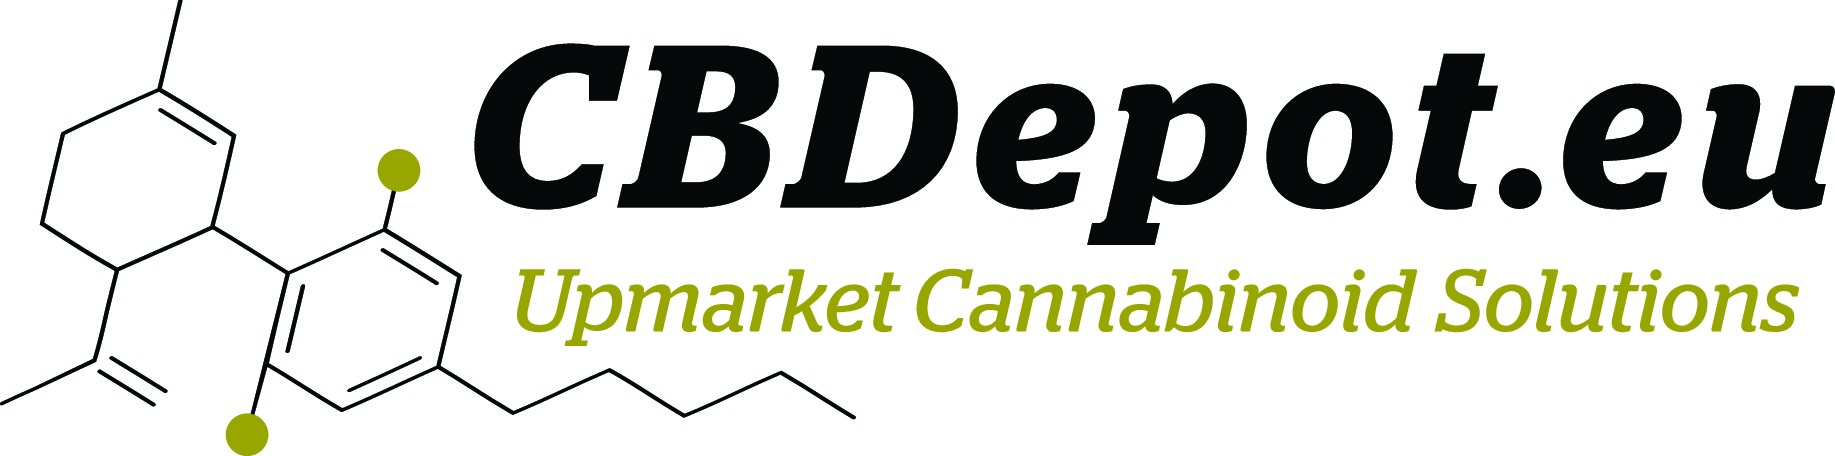 CBD_logo_2019-1